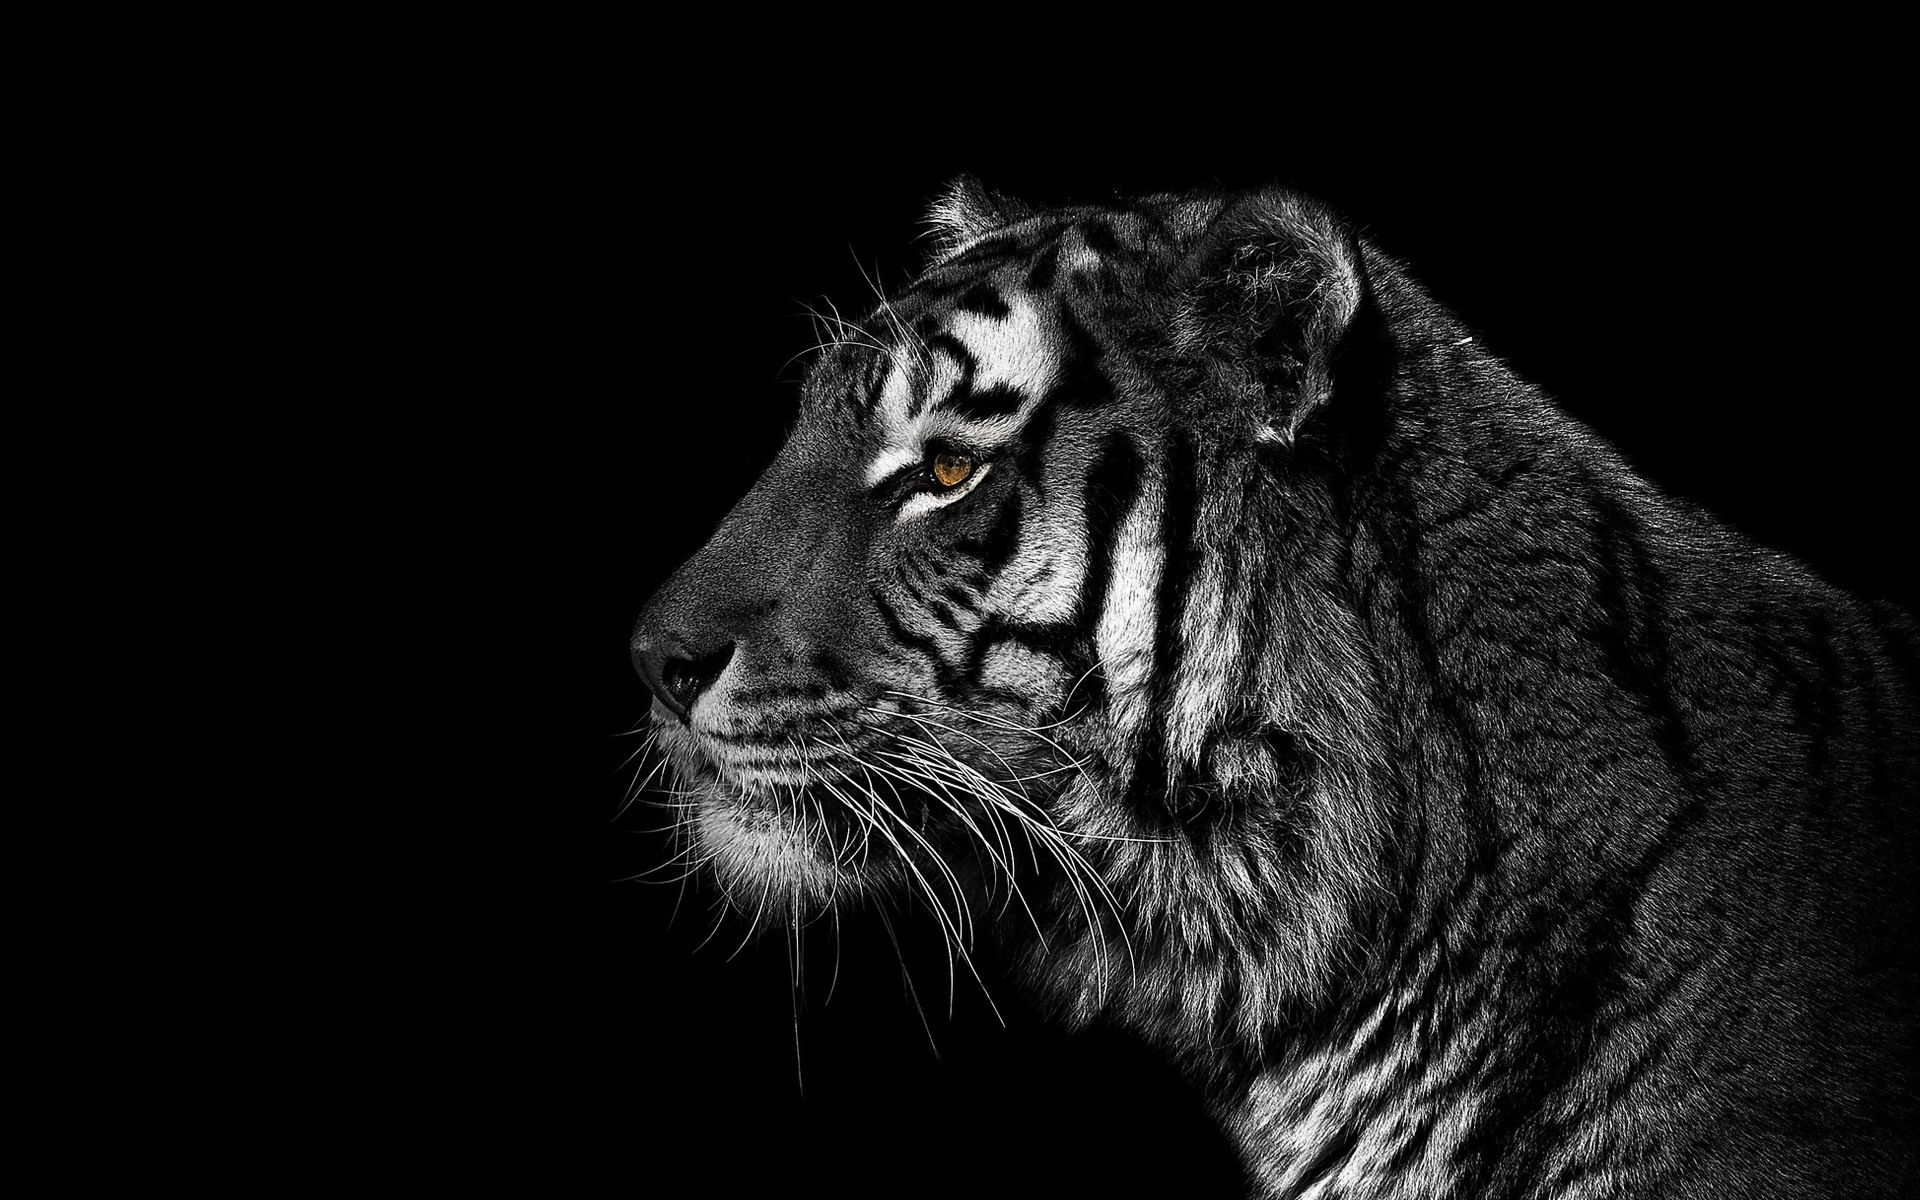 Dark Lion Wallpaper - Tiger Wallpaper Hd Black And White Iphone - HD Wallpaper 